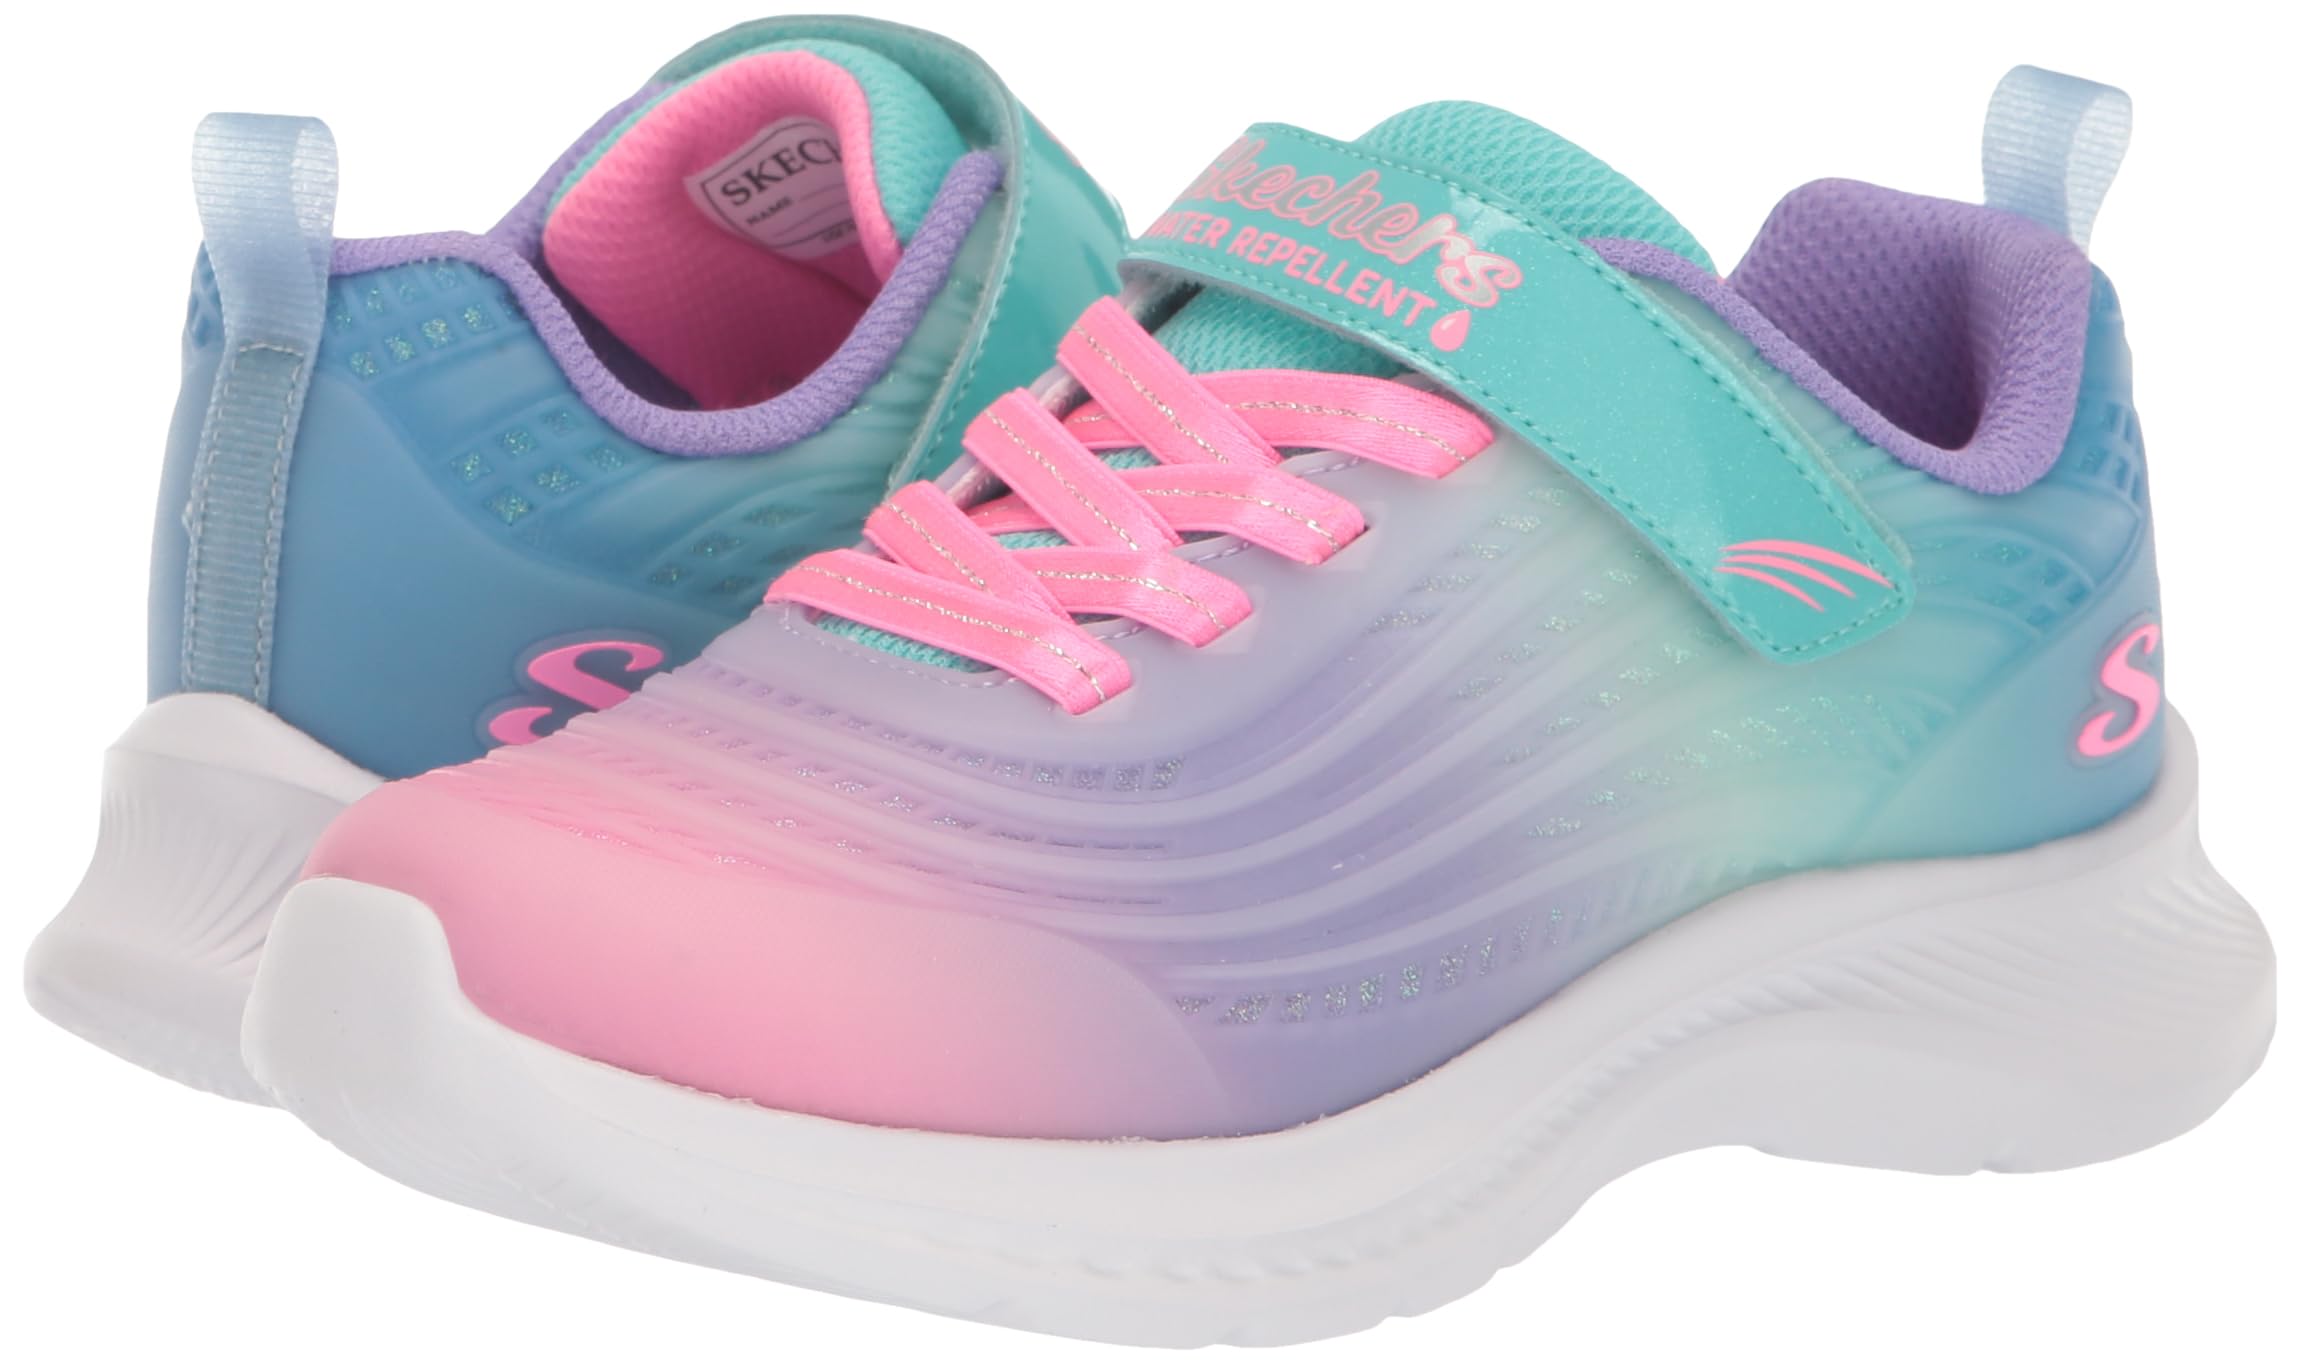 Skechers Girl's Jumpsters 2.0-Blurred Dream Sneaker